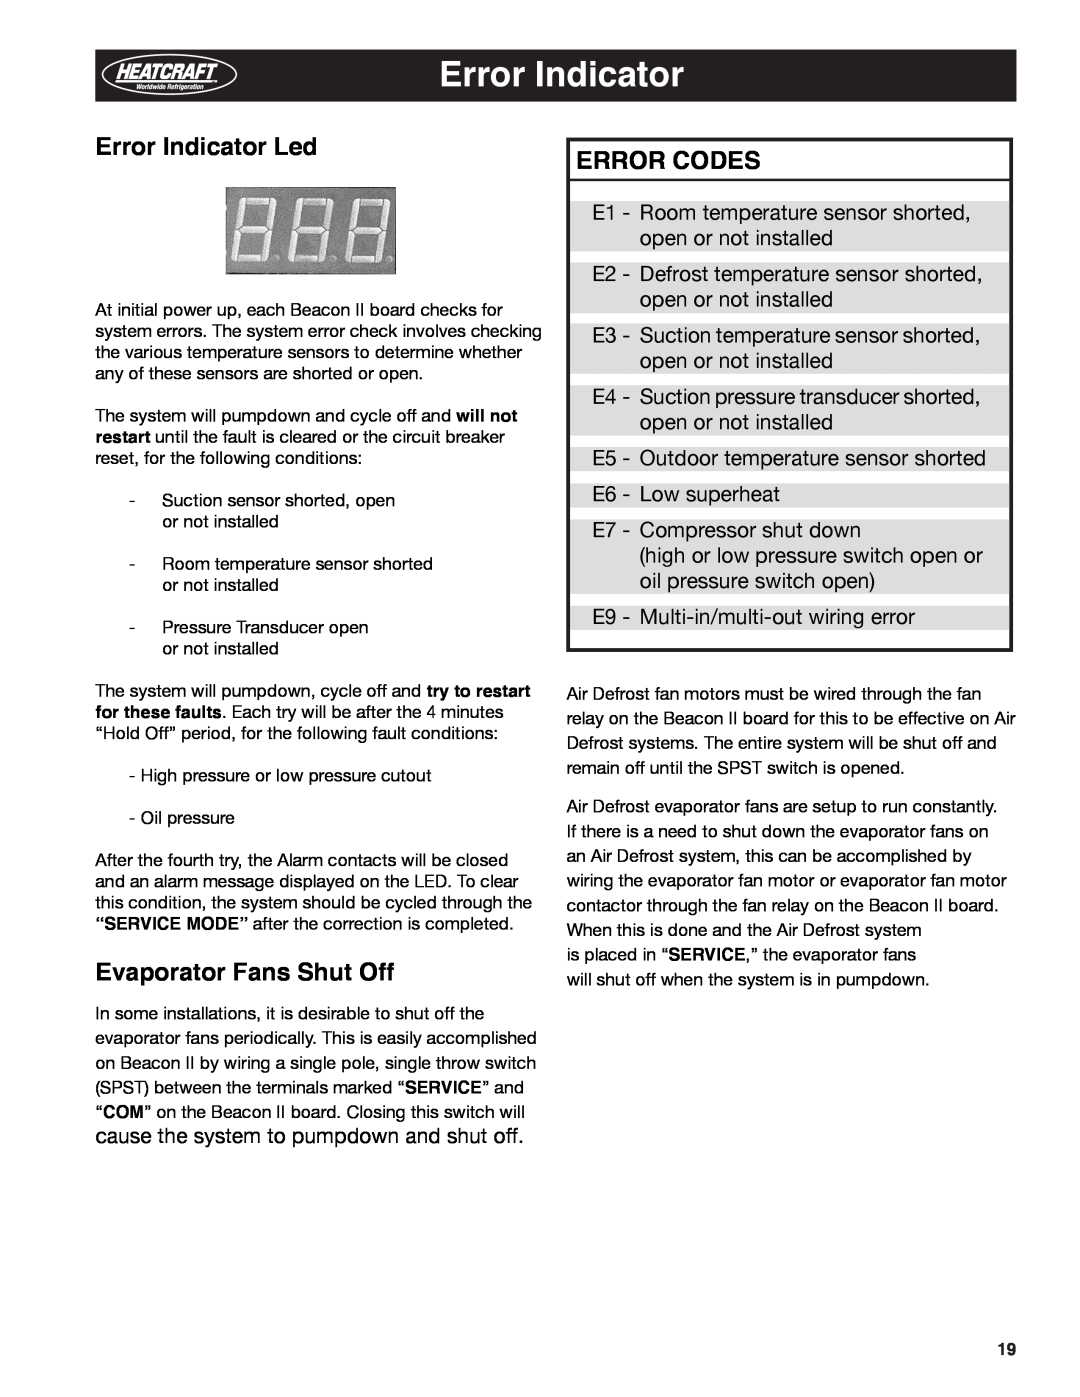 Heatcraft Refrigeration Products H-IM-79E manual Error Indicator Led, Evaporator Fans Shut Off, Error Codes 